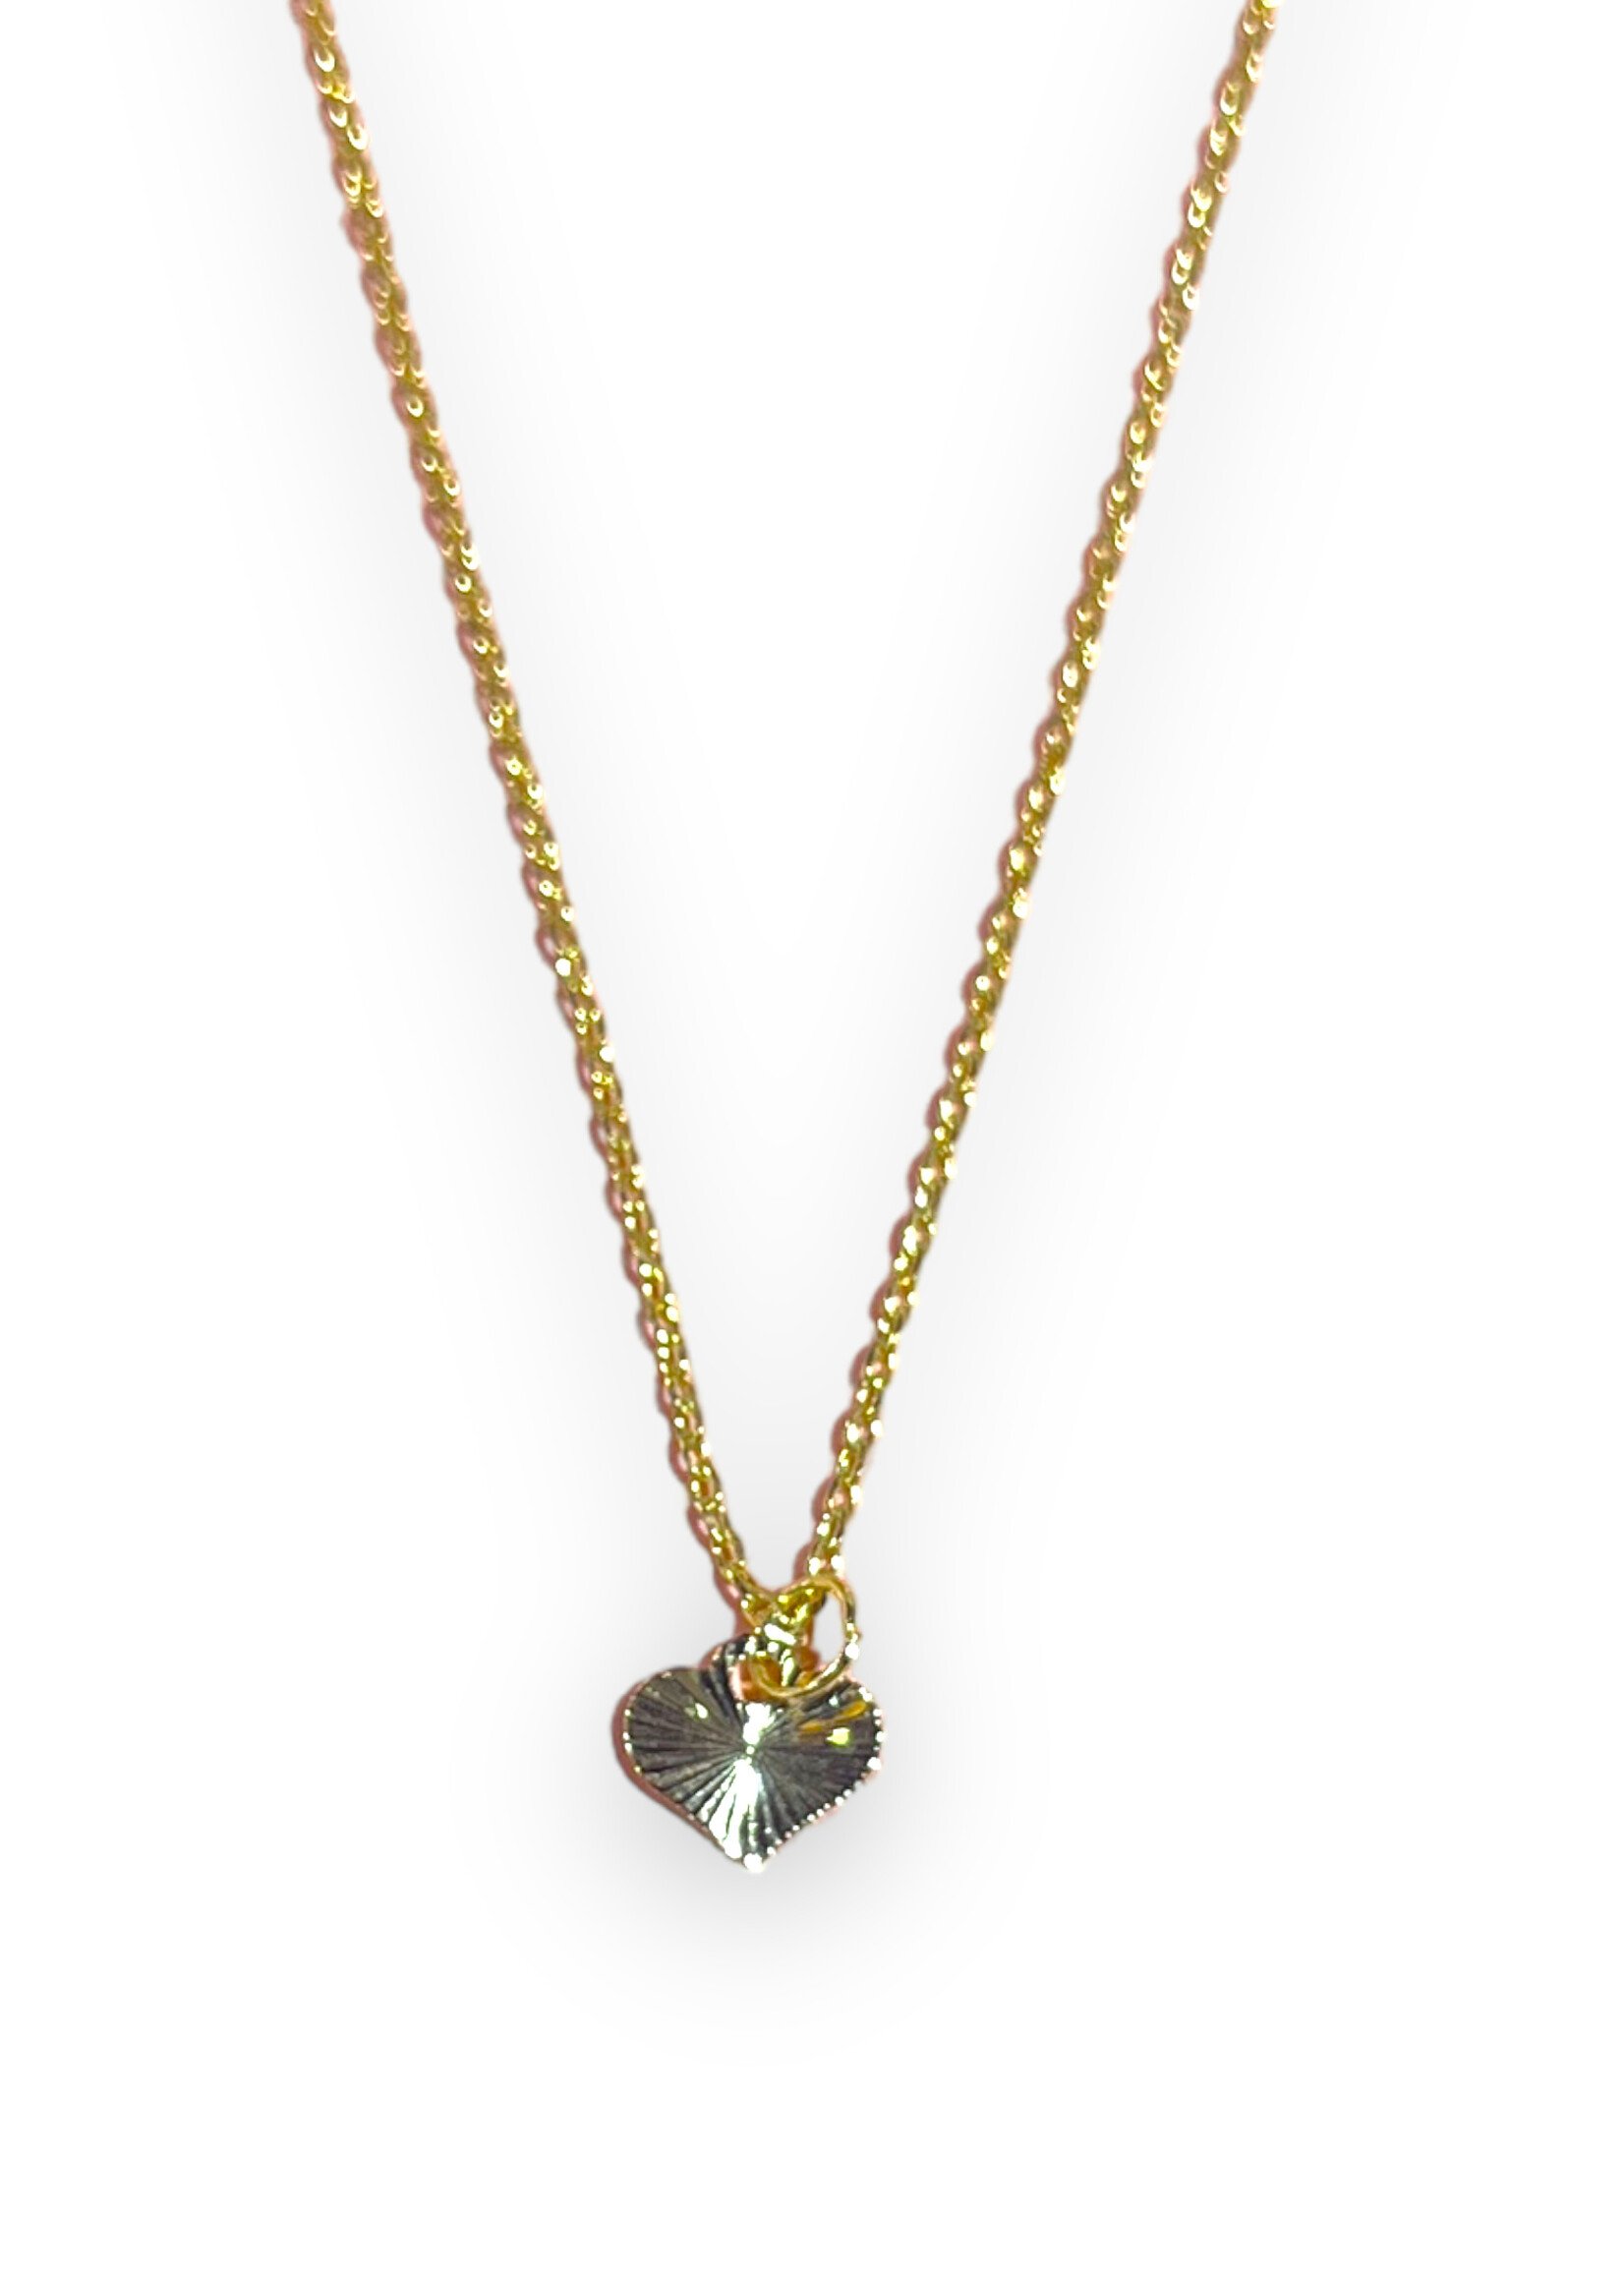 JDB Gold Plated Tiny Strobe Heart Necklace